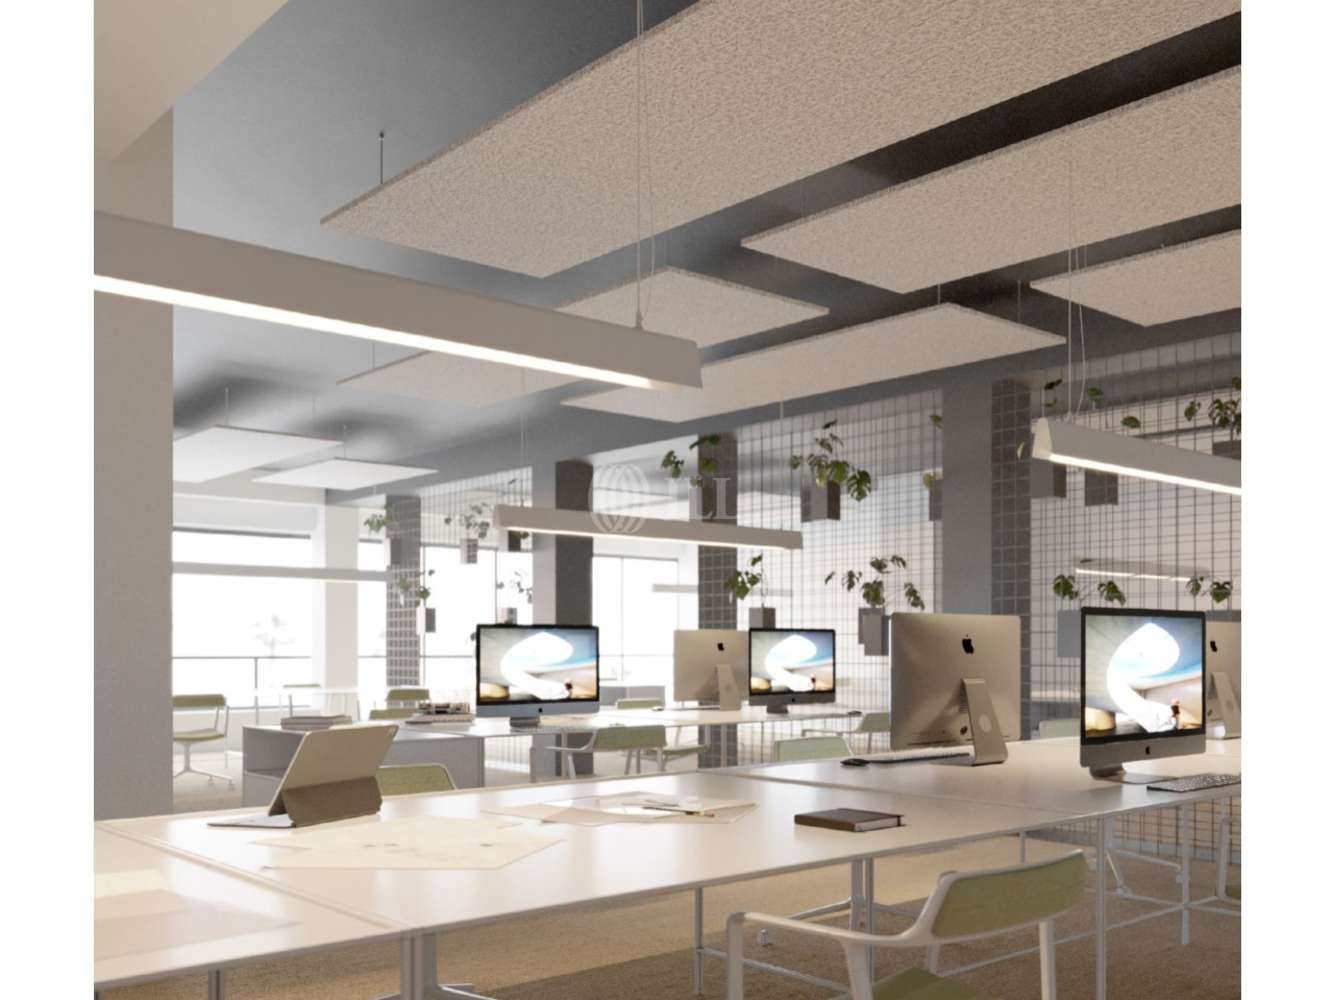 Office Matosinhos - Ariane Business Center